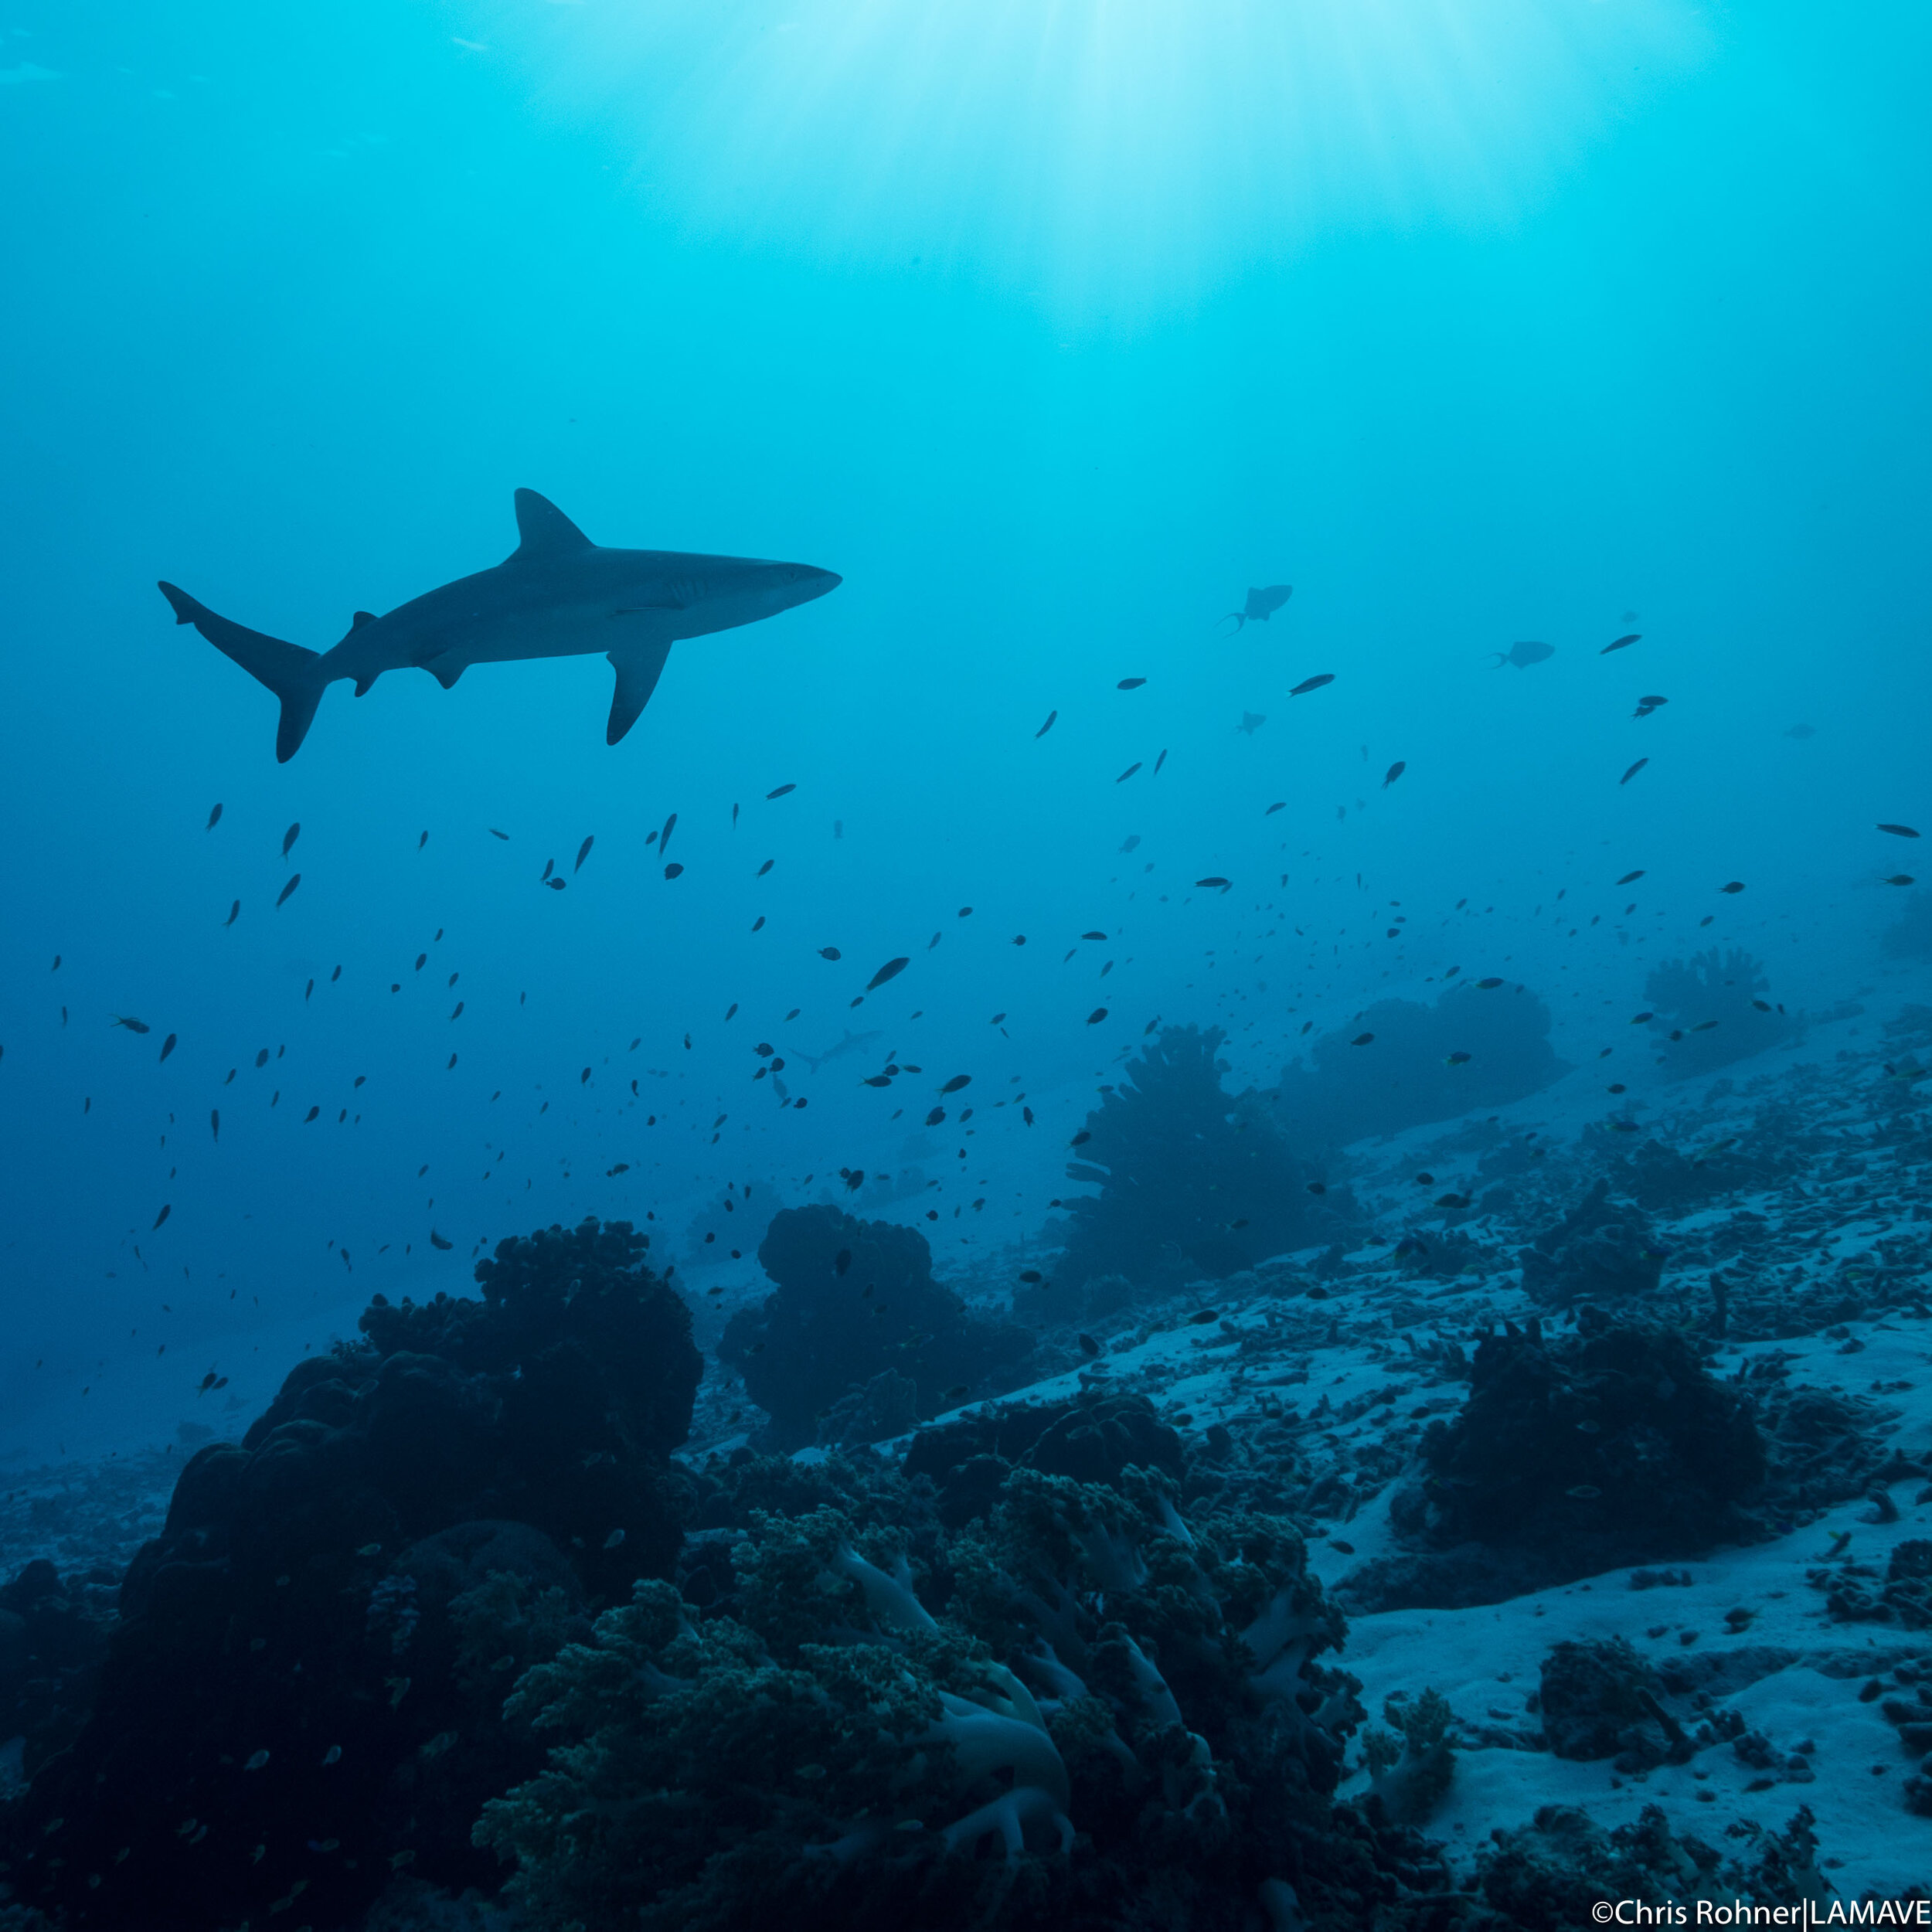 tubbataha-reefs-expedition-shark-lamave-philippines-chris-rohner (3 of 3).jpg